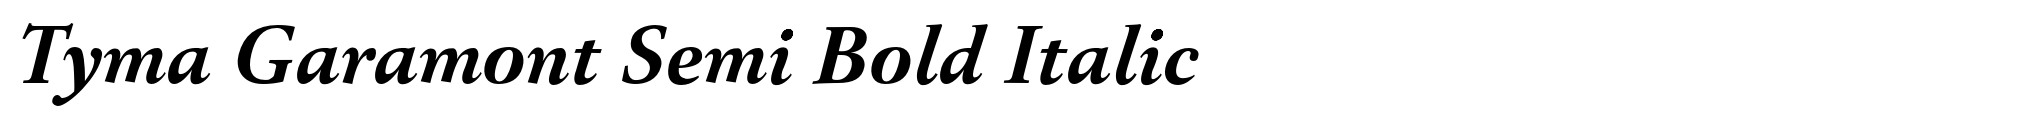 Tyma Garamont Semi Bold Italic image